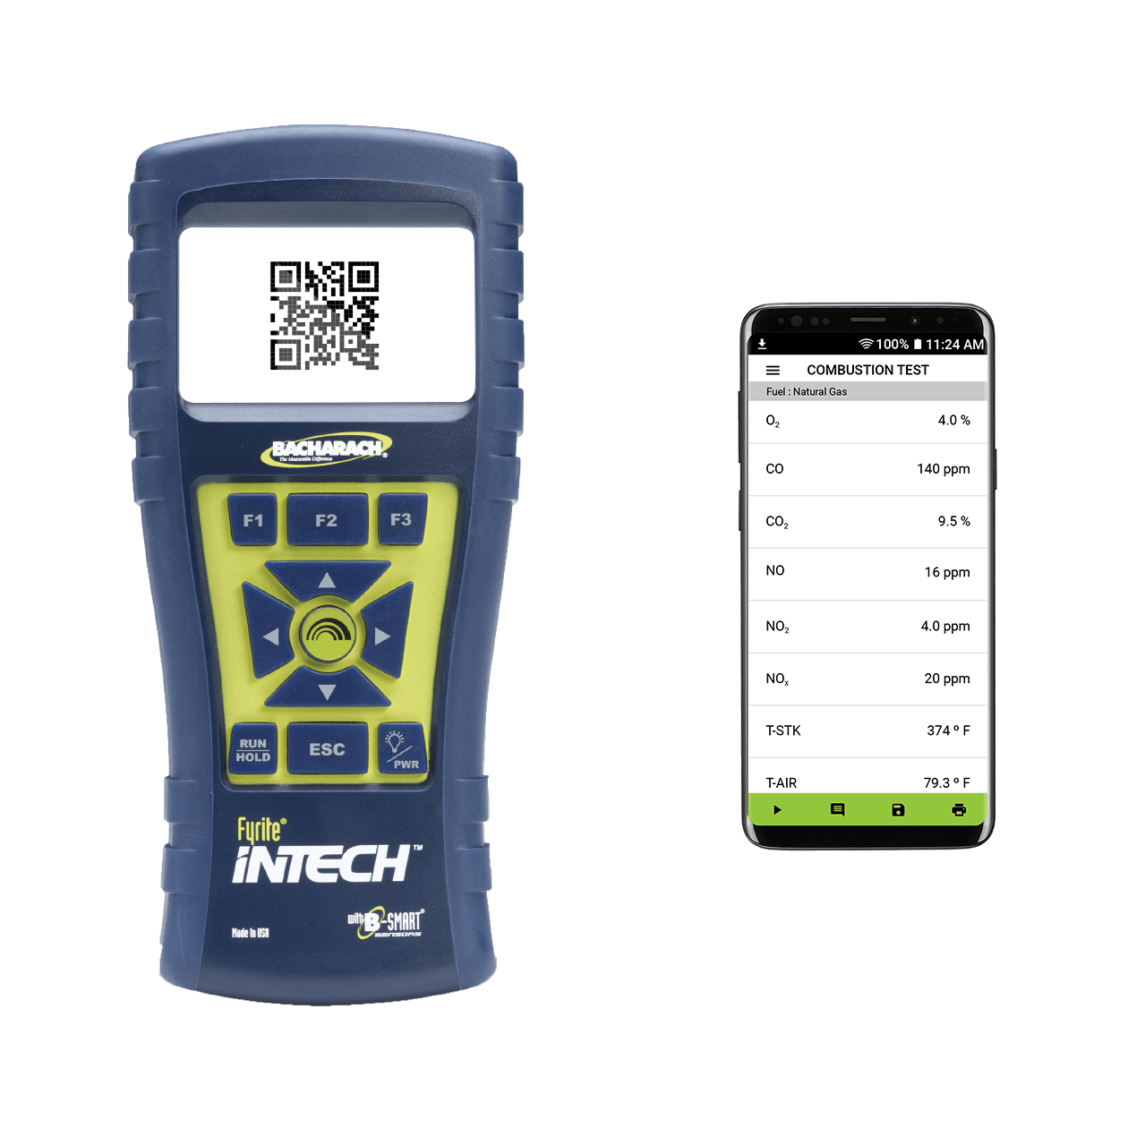 Bacharach Fyrite Intech forbrenningsanalysator tilkoblet app